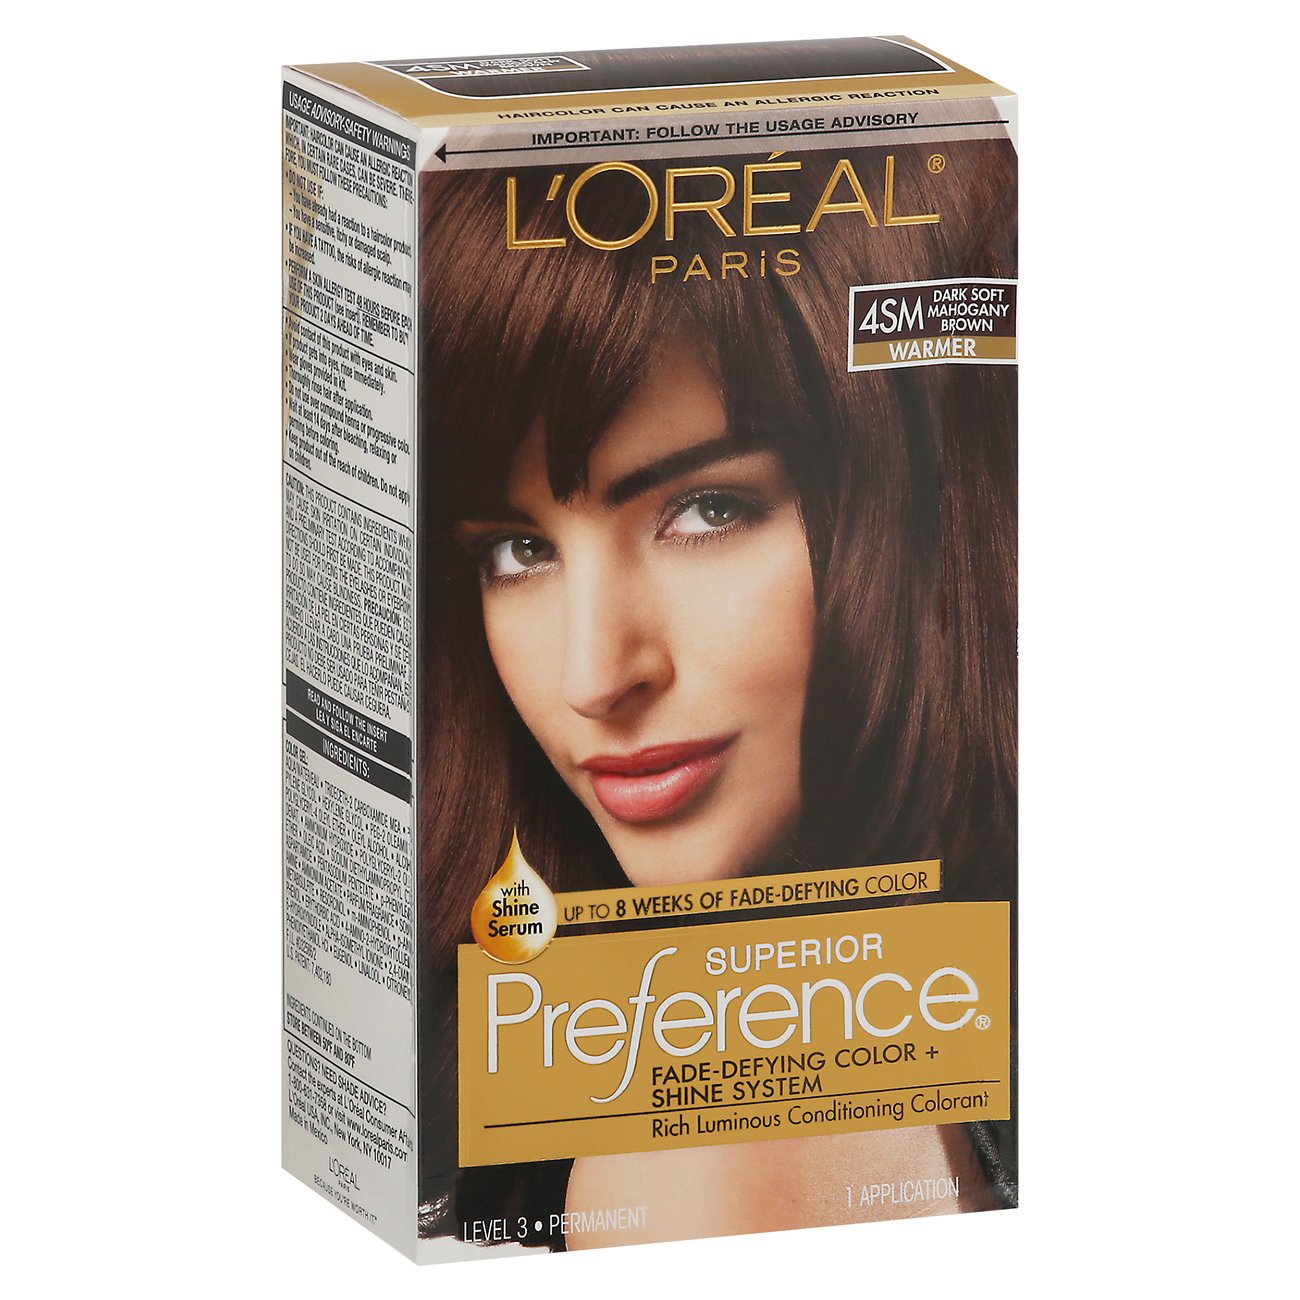 L'Oréal Paris Superior Preference Permanent Hair Color, 4SM Dark Soft Mahogany  Brown - Shop Hair Care at H-E-B